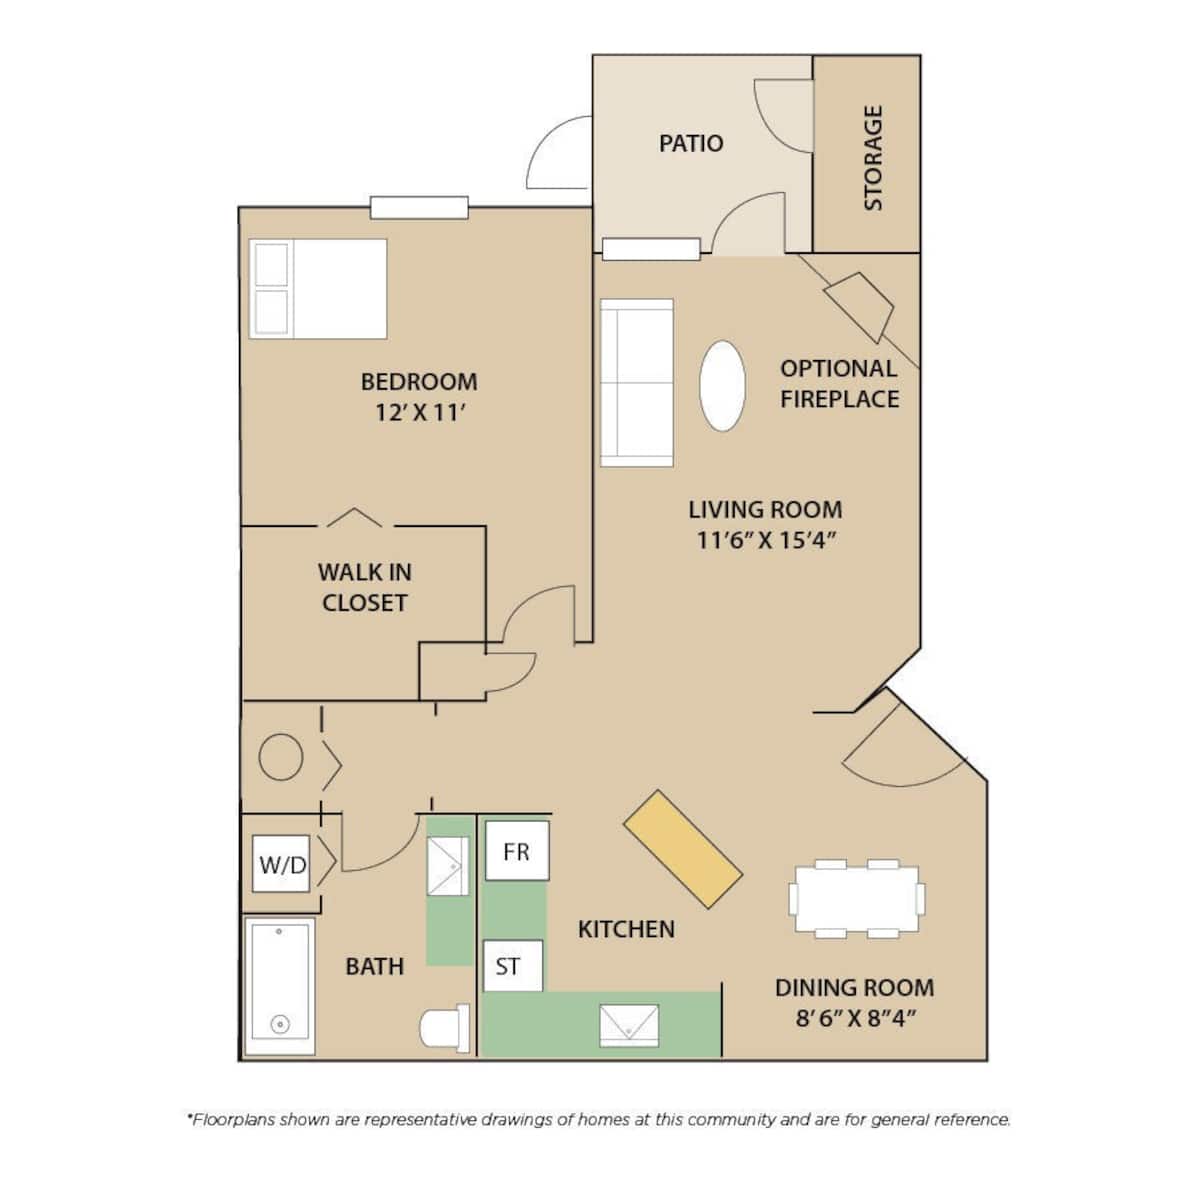 Floorplan diagram for Cape Elizabeth Lakeview, showing 1 bedroom